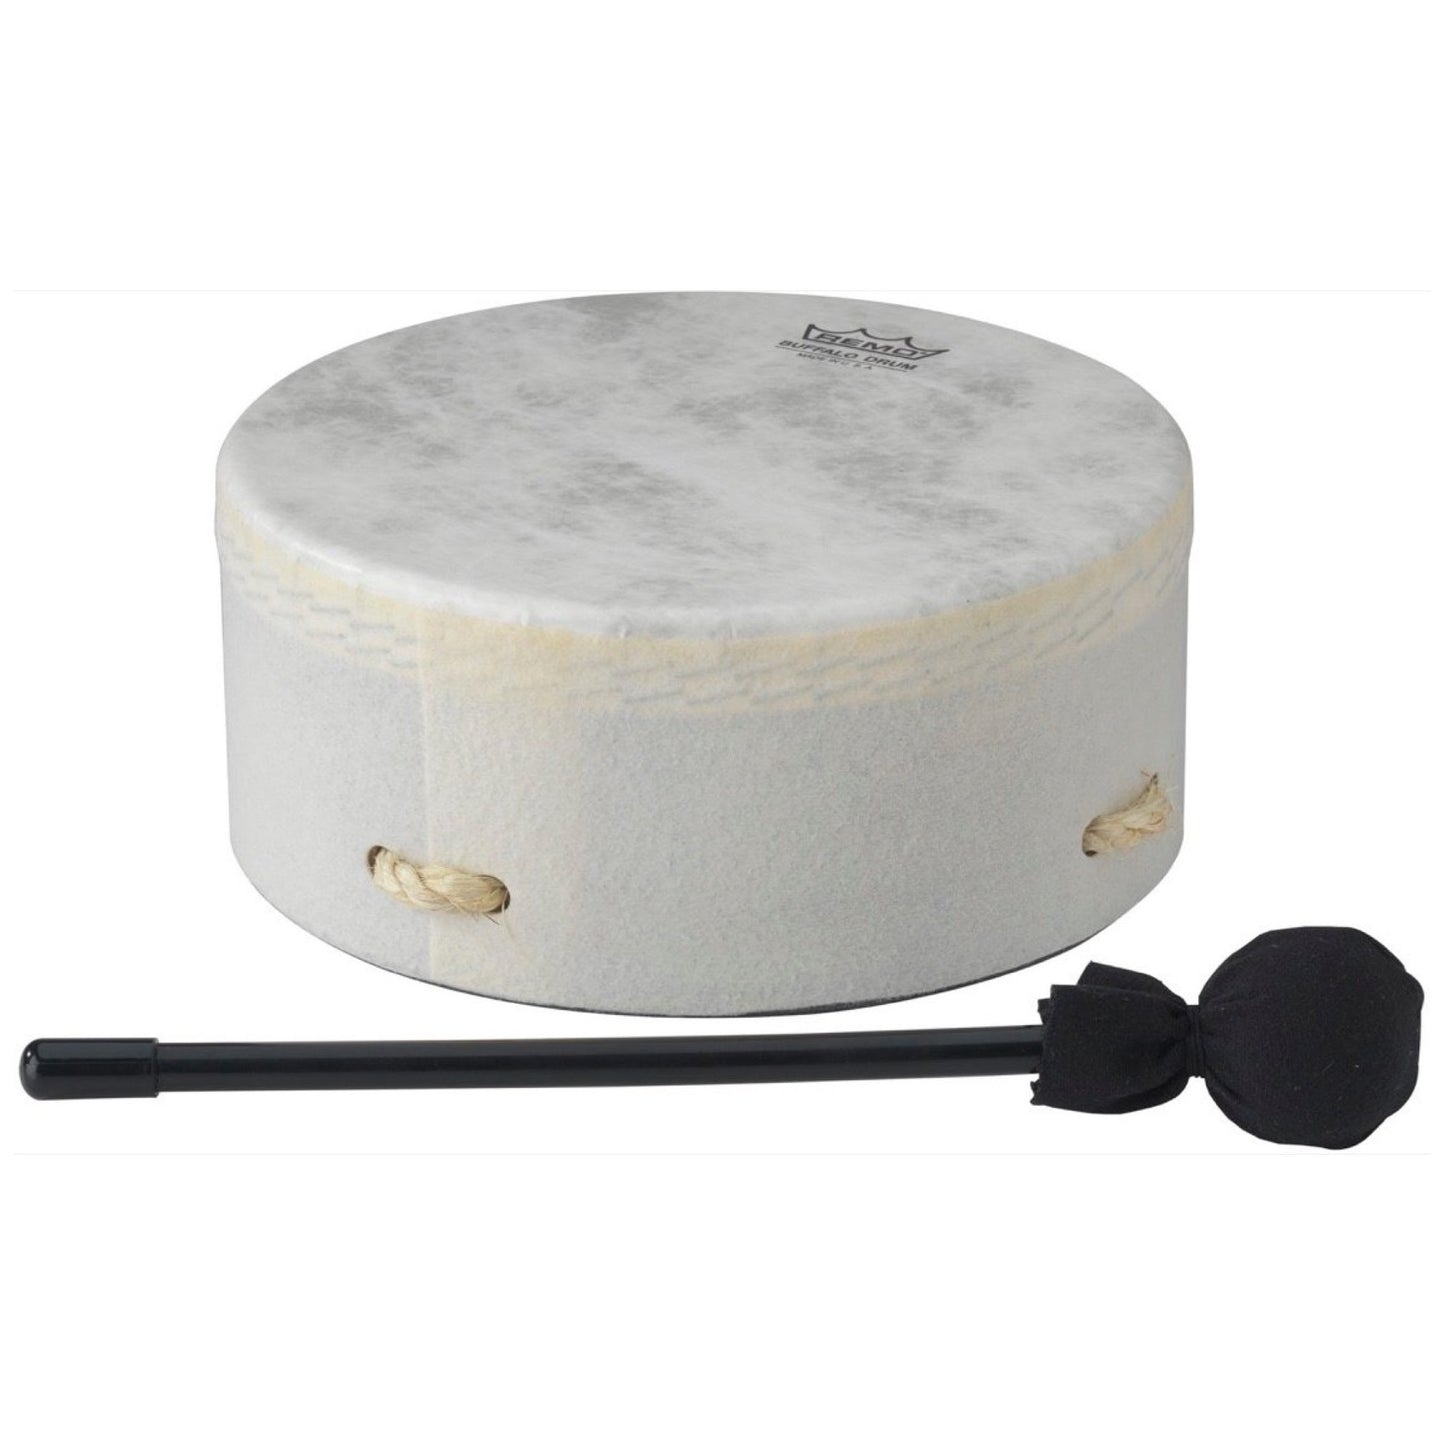 Remo Buffalo Standard Drum, 22x3 1/2 Inch